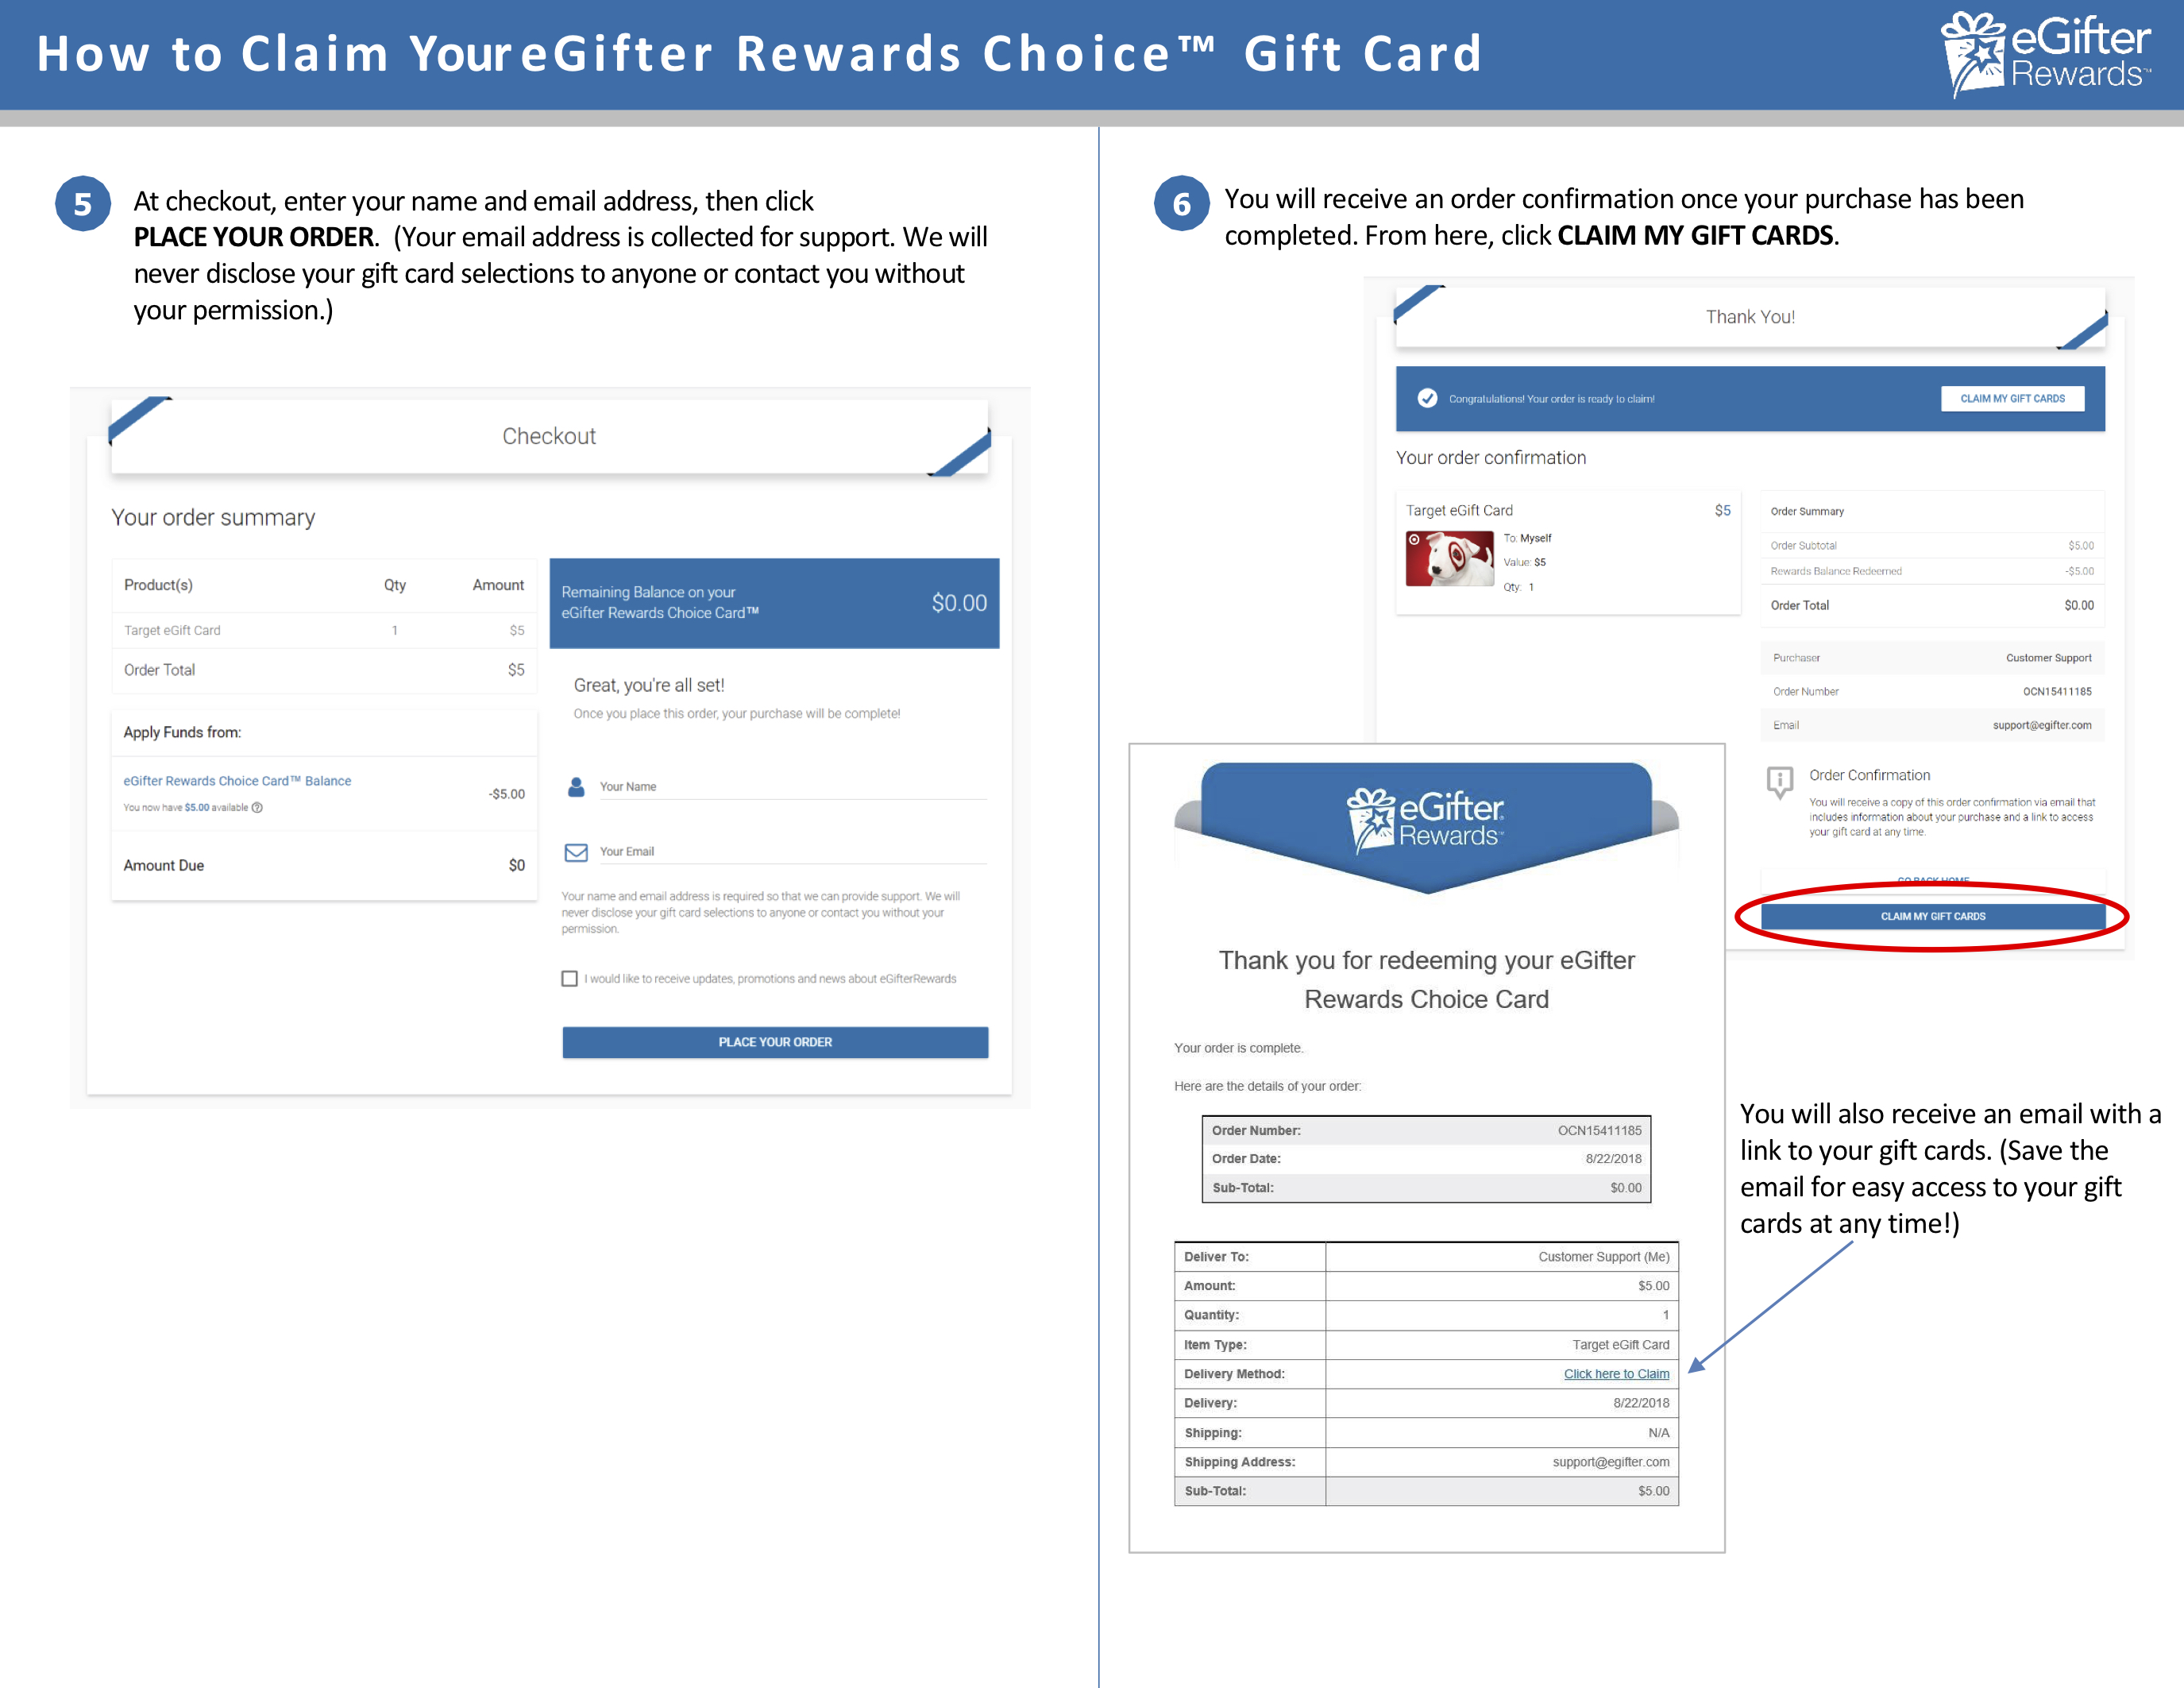 2._Redeem_Your_eGifter_Rewards_Choice_Card.jpg